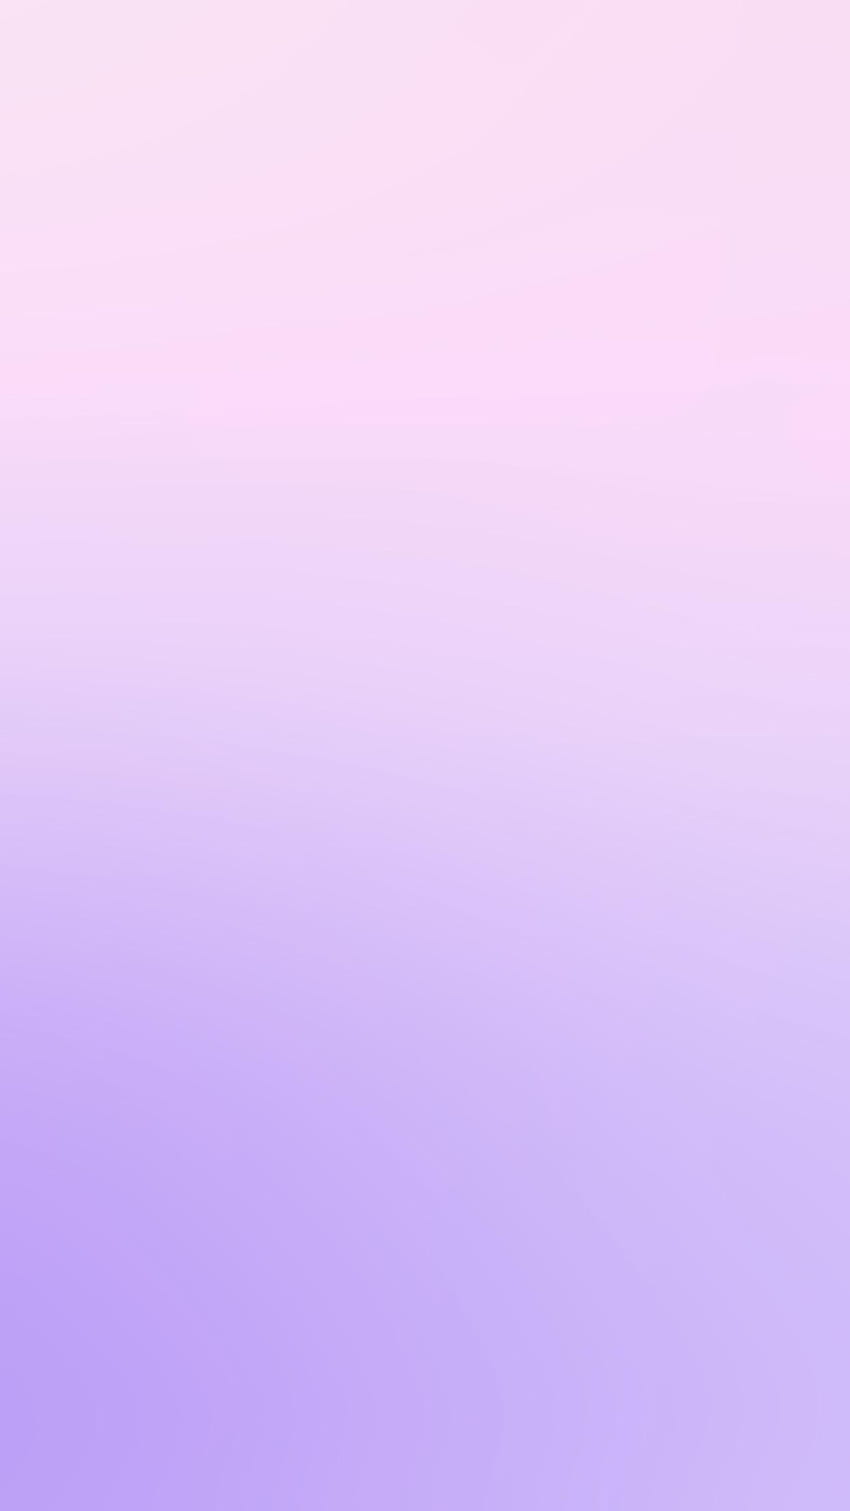 Phone wallpaper background pastel pink and purple flower pattern 4   Fondos de pantalla de iphone Ideas de fondos de pantalla Iphone fondos de  pantalla